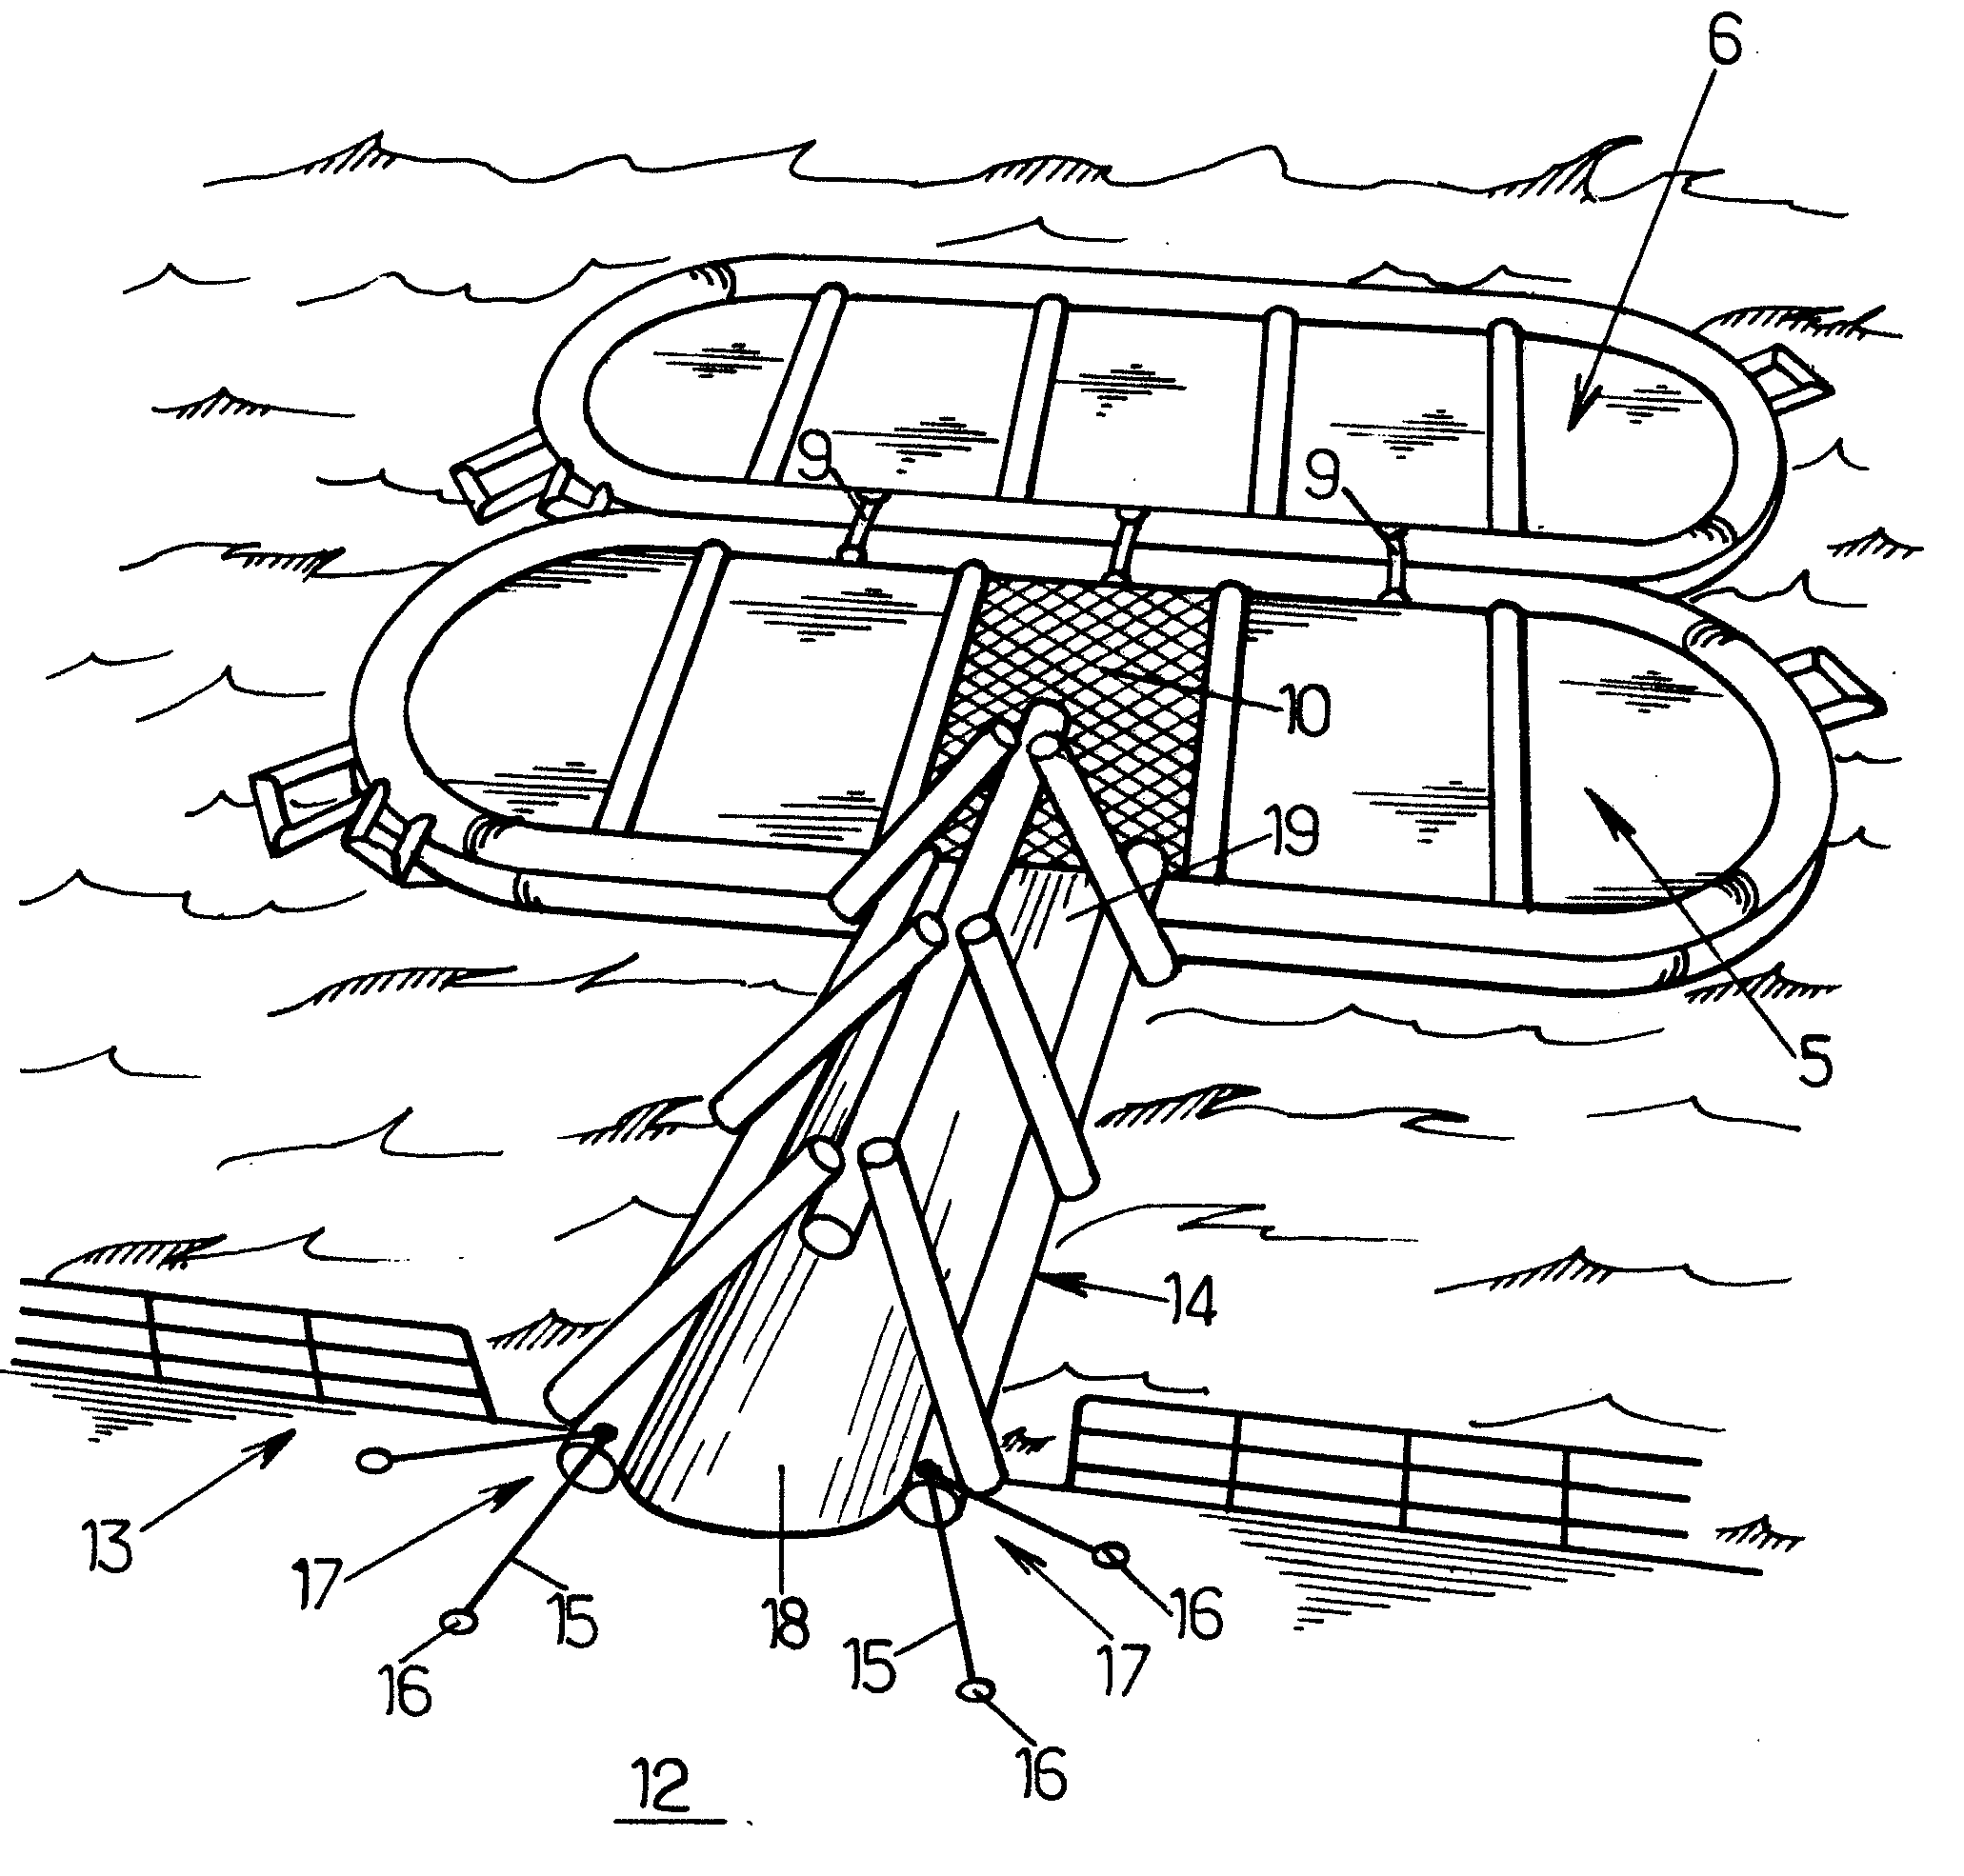 Sea survival device including several pneumatic liferafts